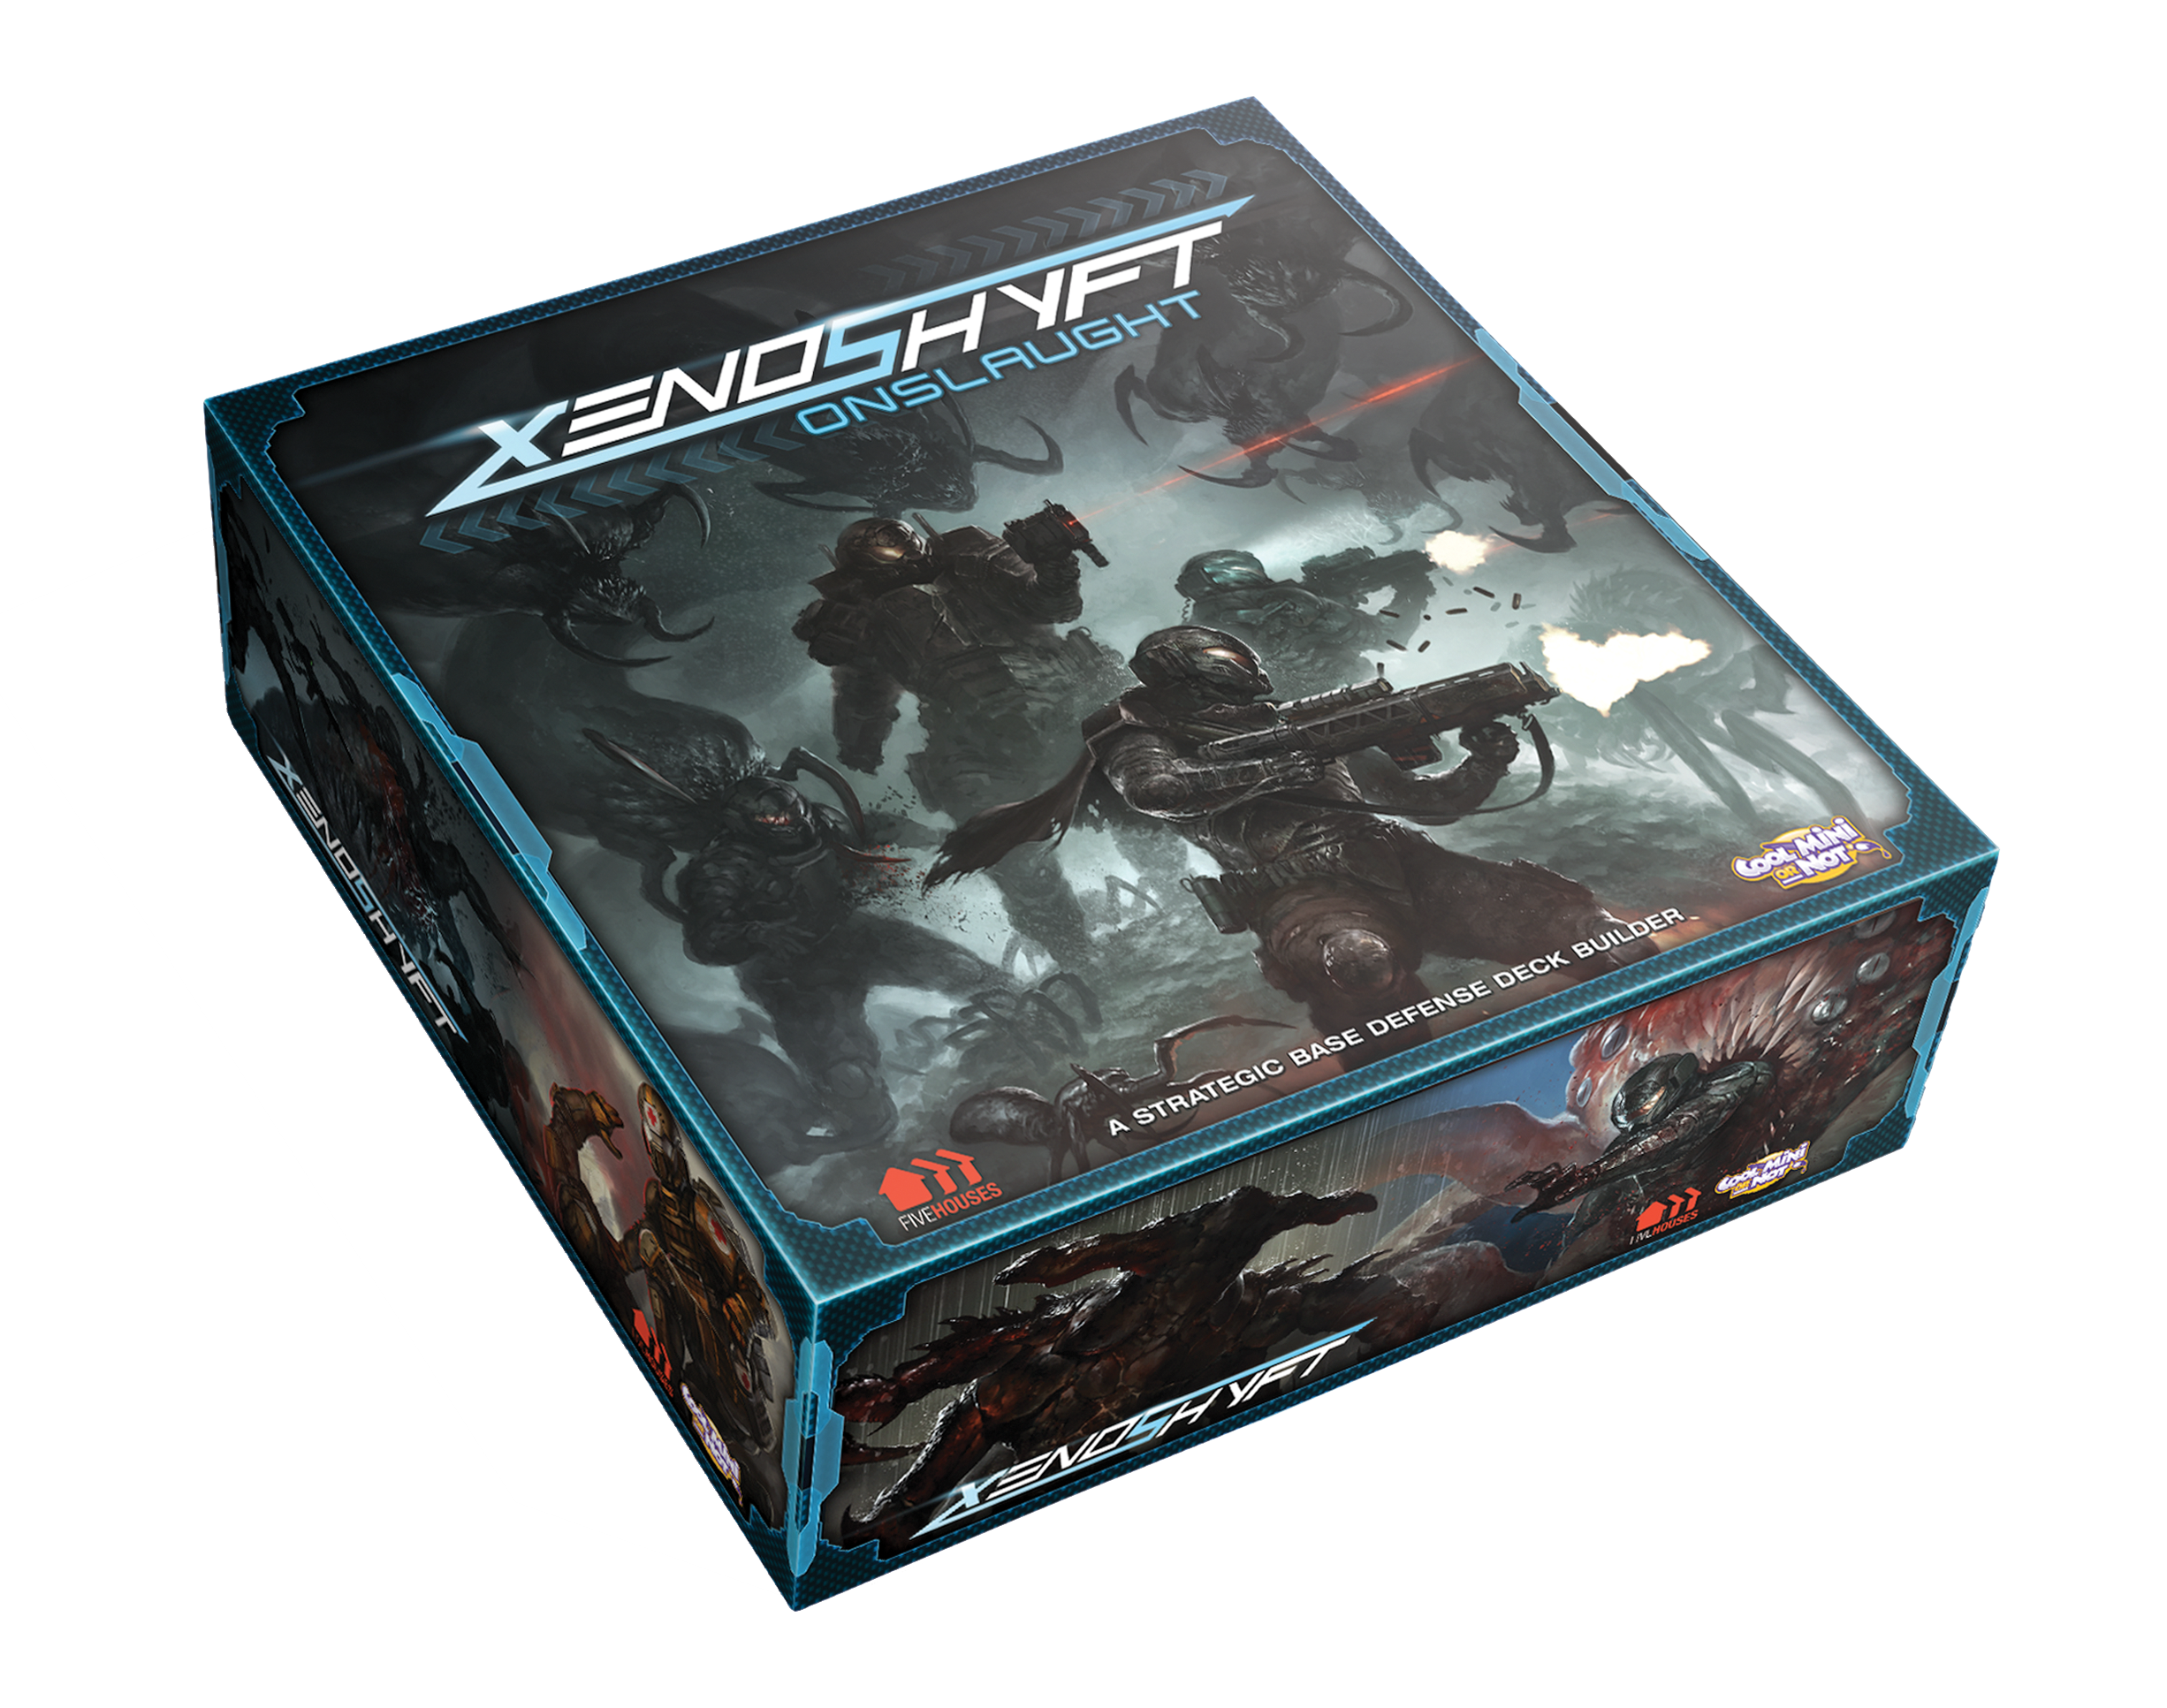 XenoShyft Onslaught is Live on Kickstarter!